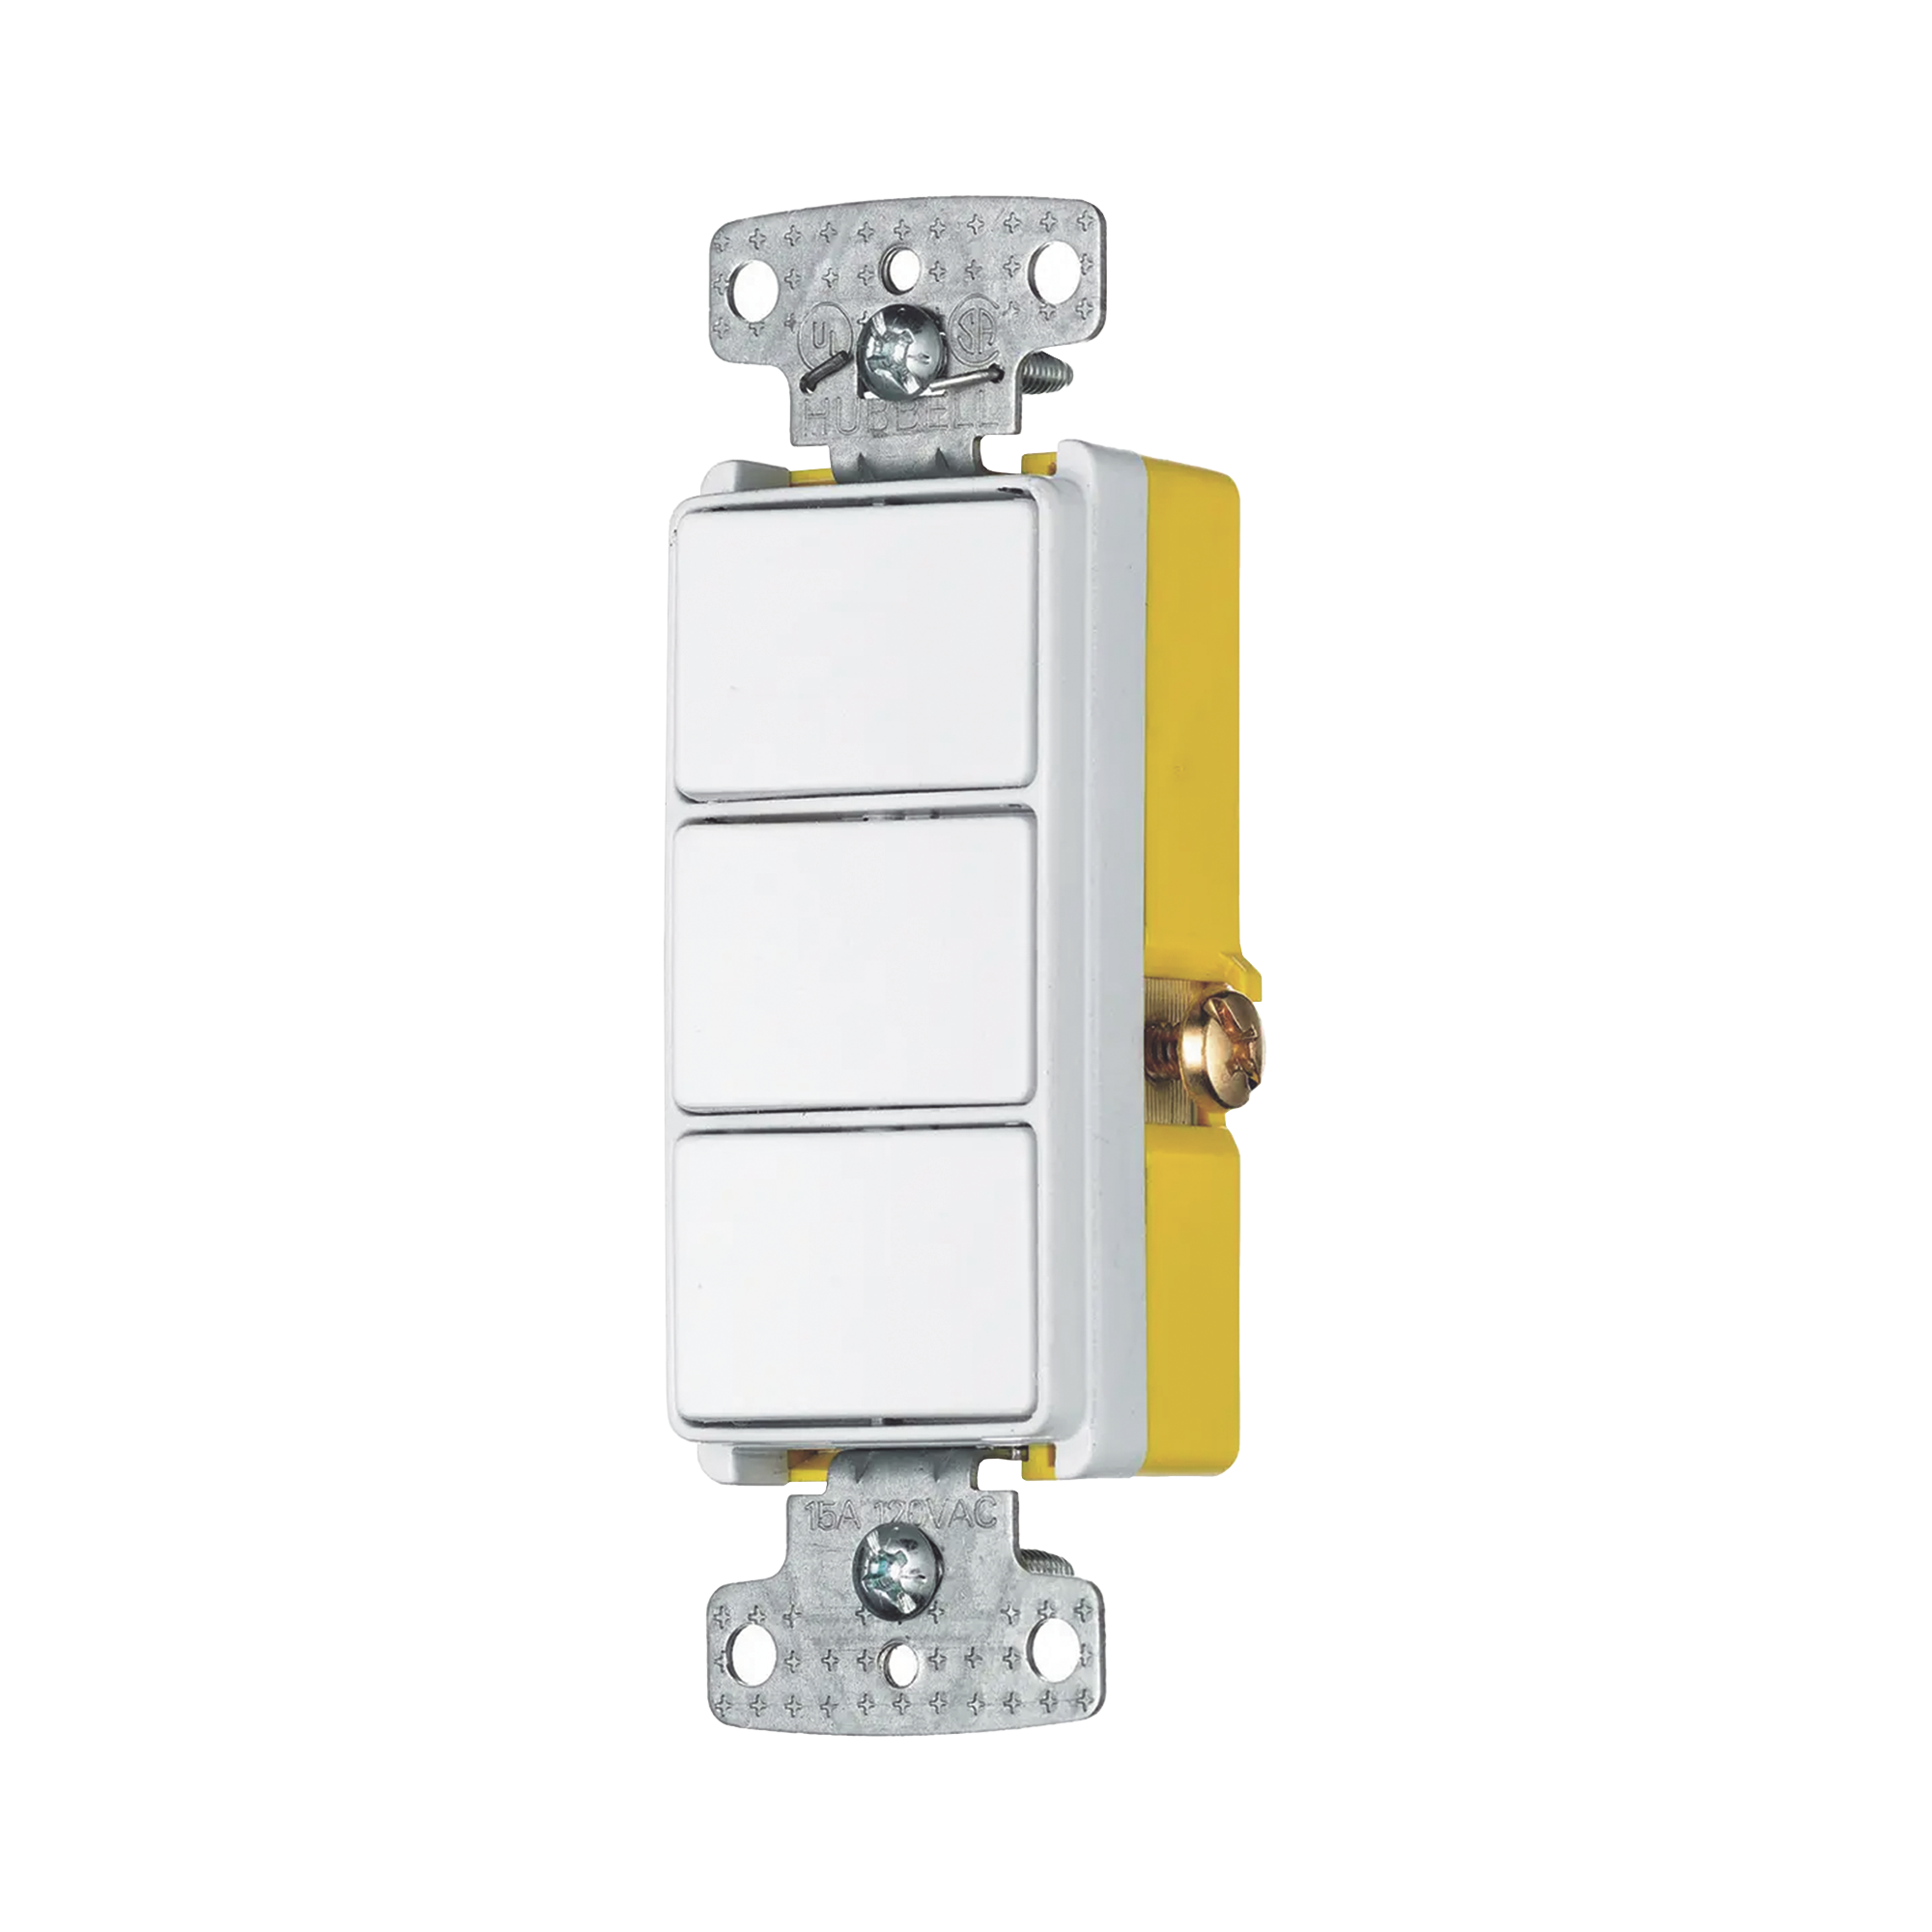 Interruptor Residencial 15 A 120 V, con 3 Bases Unipolares, Cableado lateral, Color Blanco.